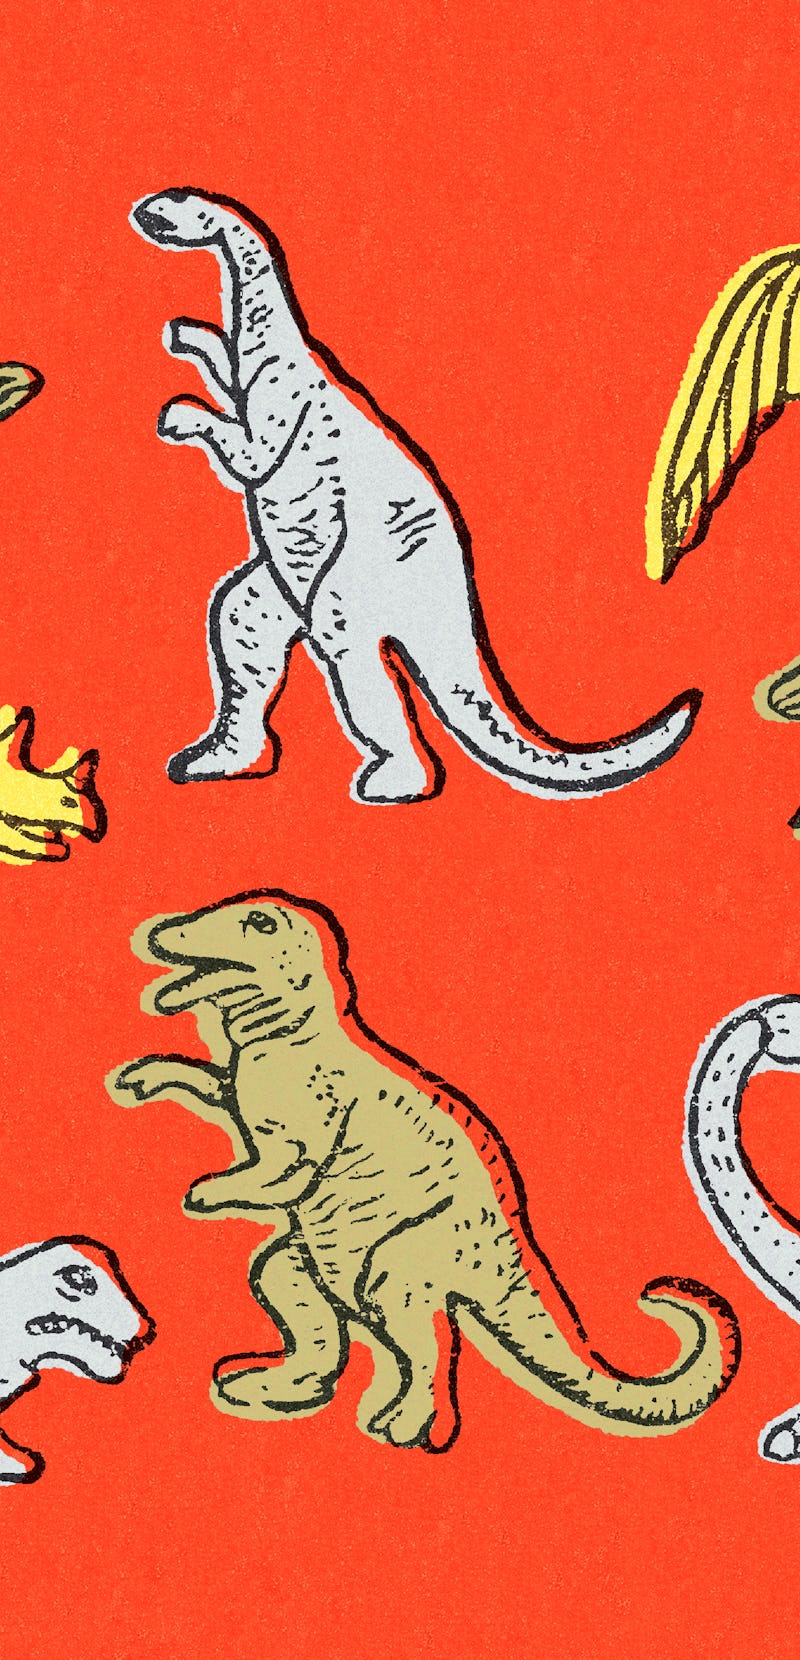 Variety of Dinosaurs